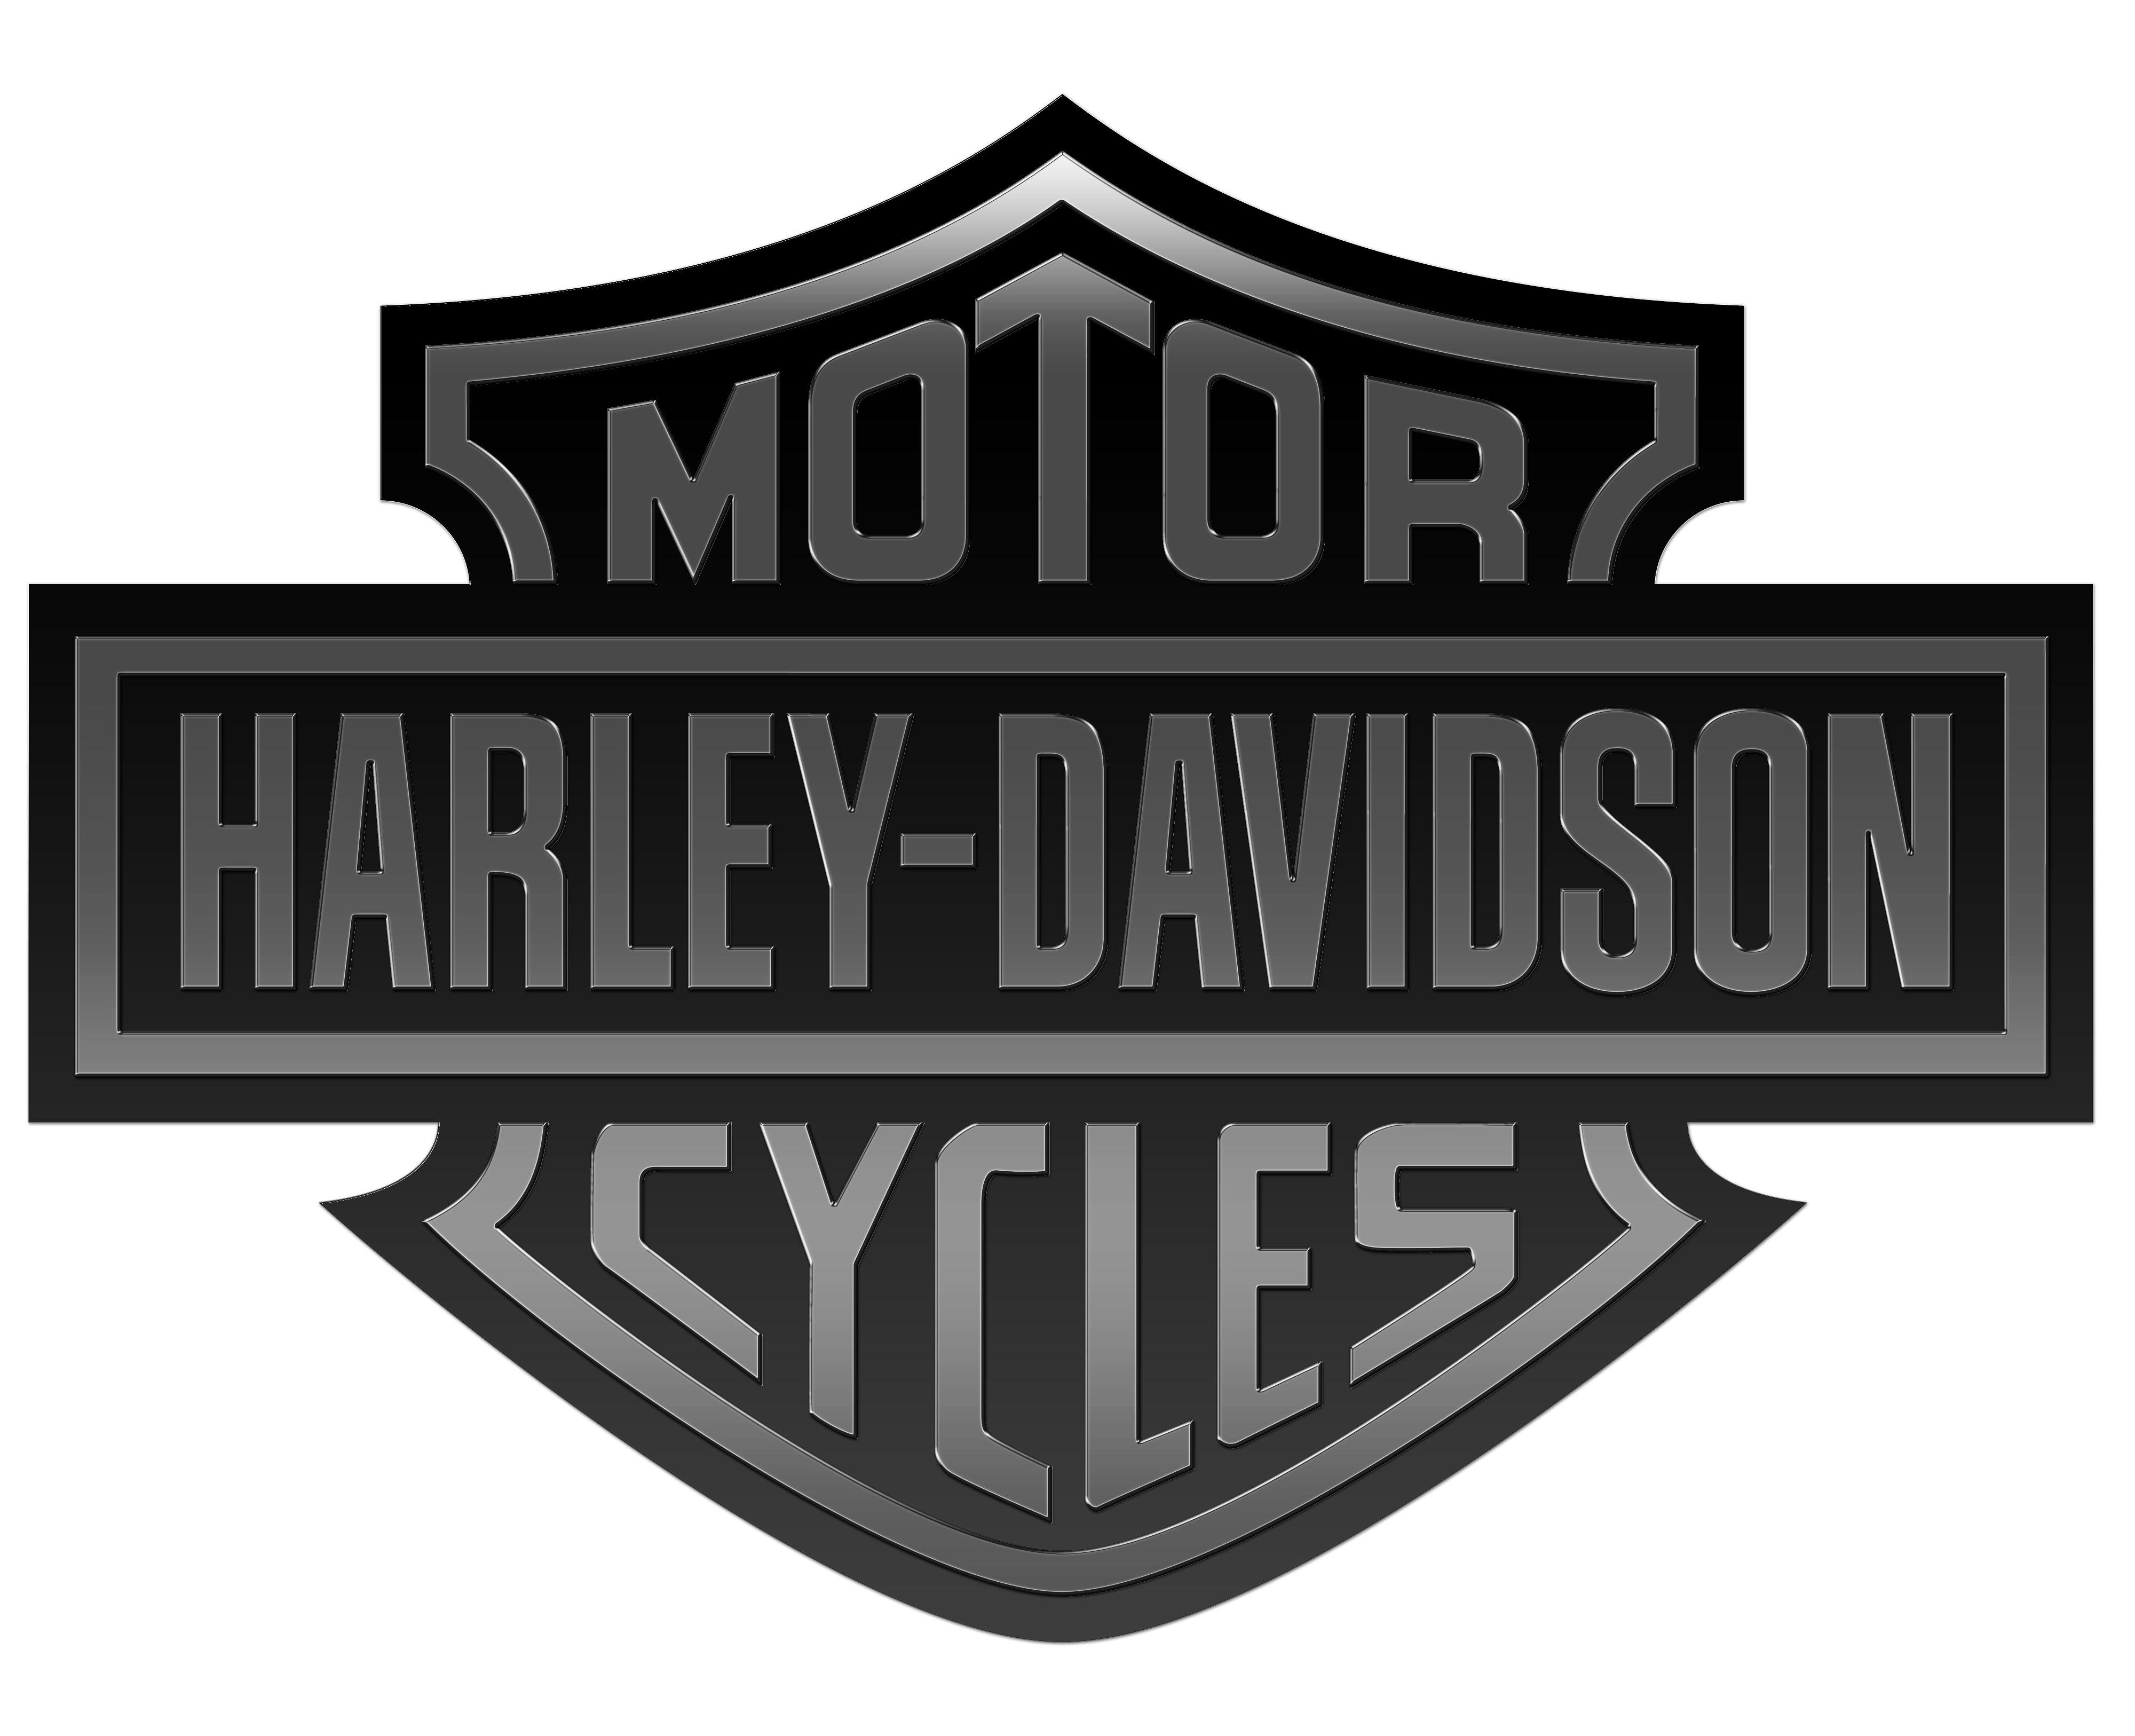 Black and White Harley-Davidson Logo - Harley Davidson Logo